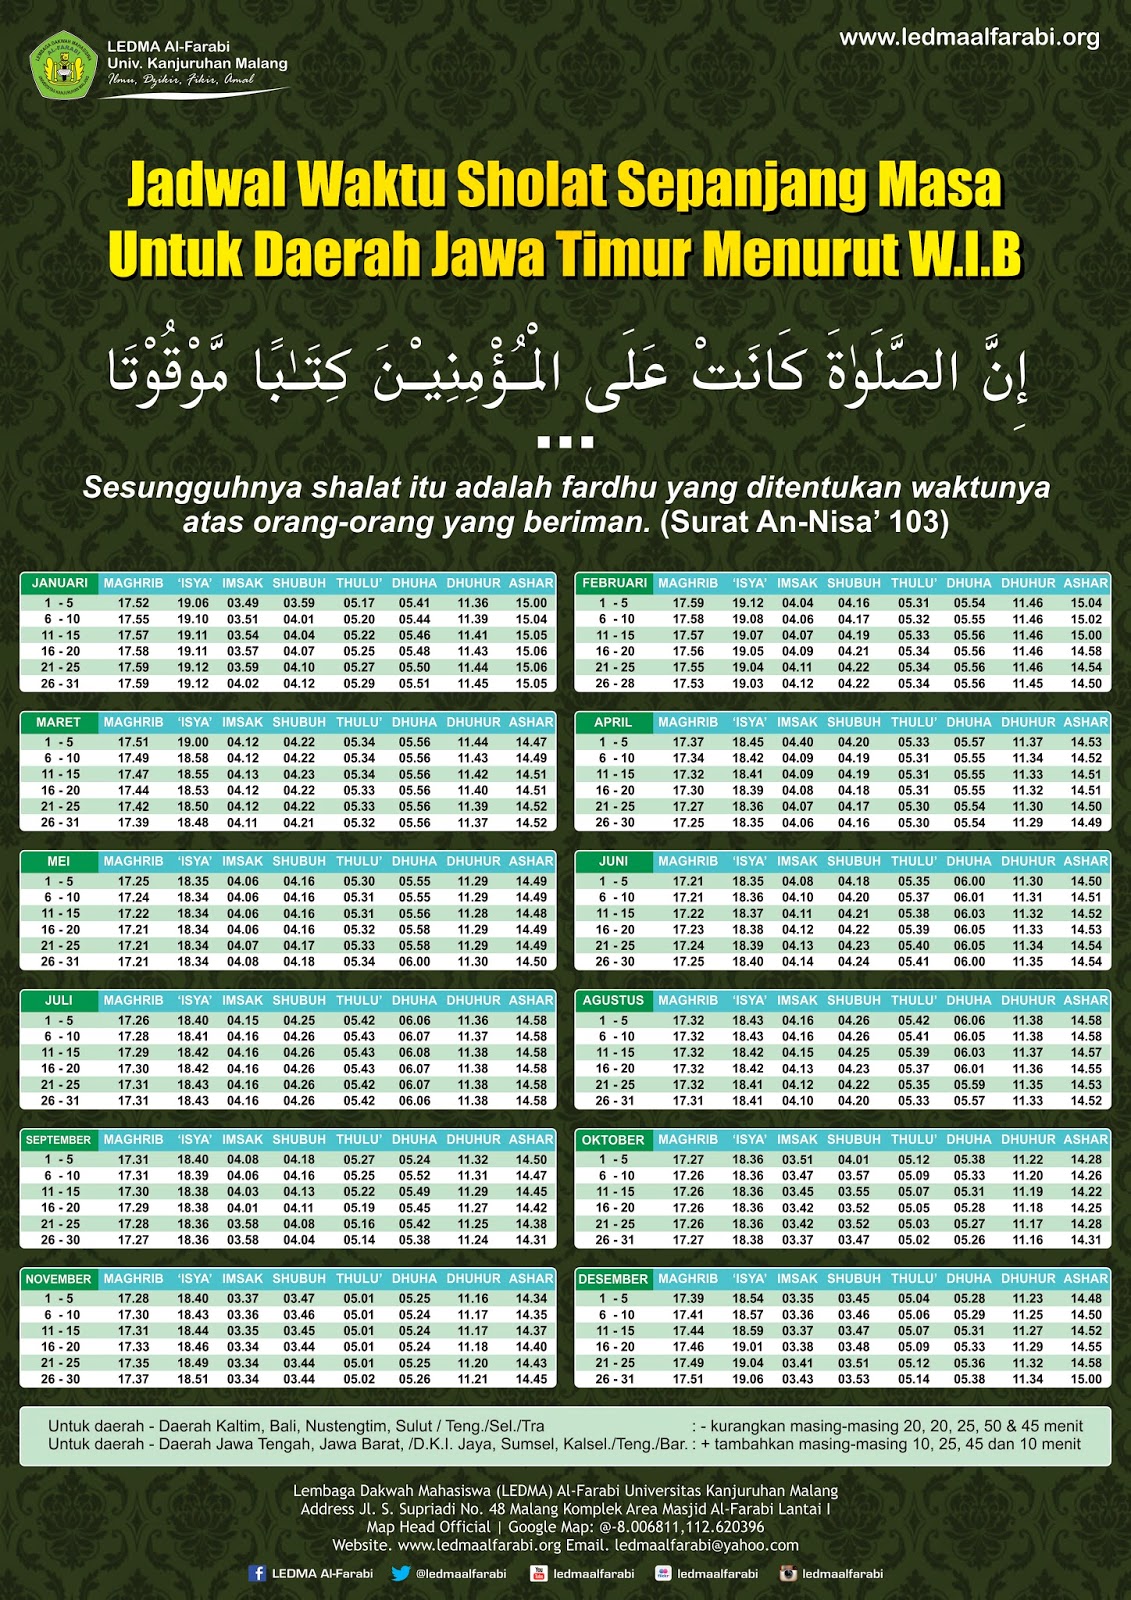 Jadwal Waktu Sholat Sepanjang Masa Wilayah Jawa Timur